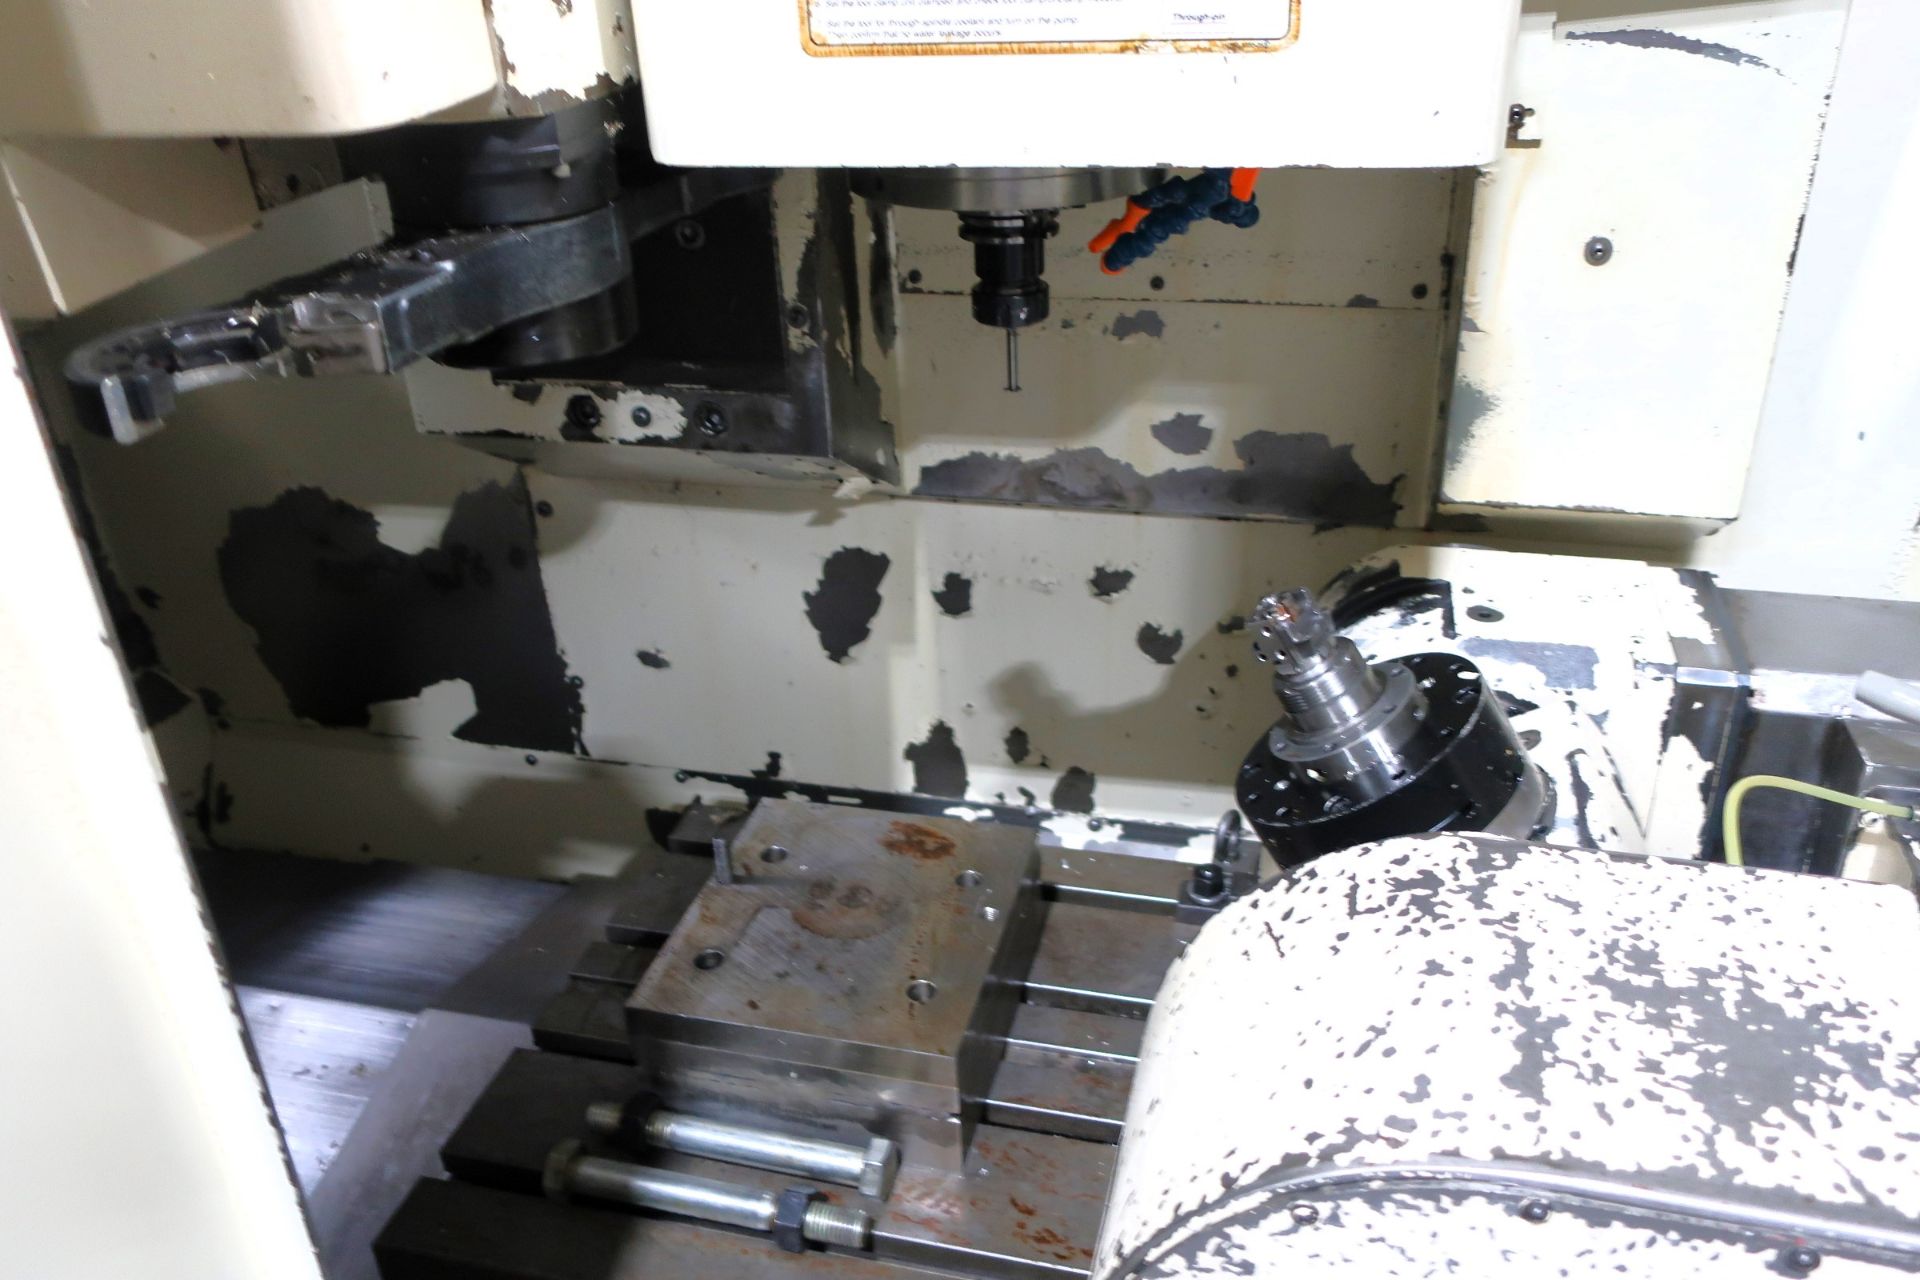 Okuma MC-V3016 5-Axis CNC Vertical Machining Center, S/N 0038, New 2003 - Image 14 of 19